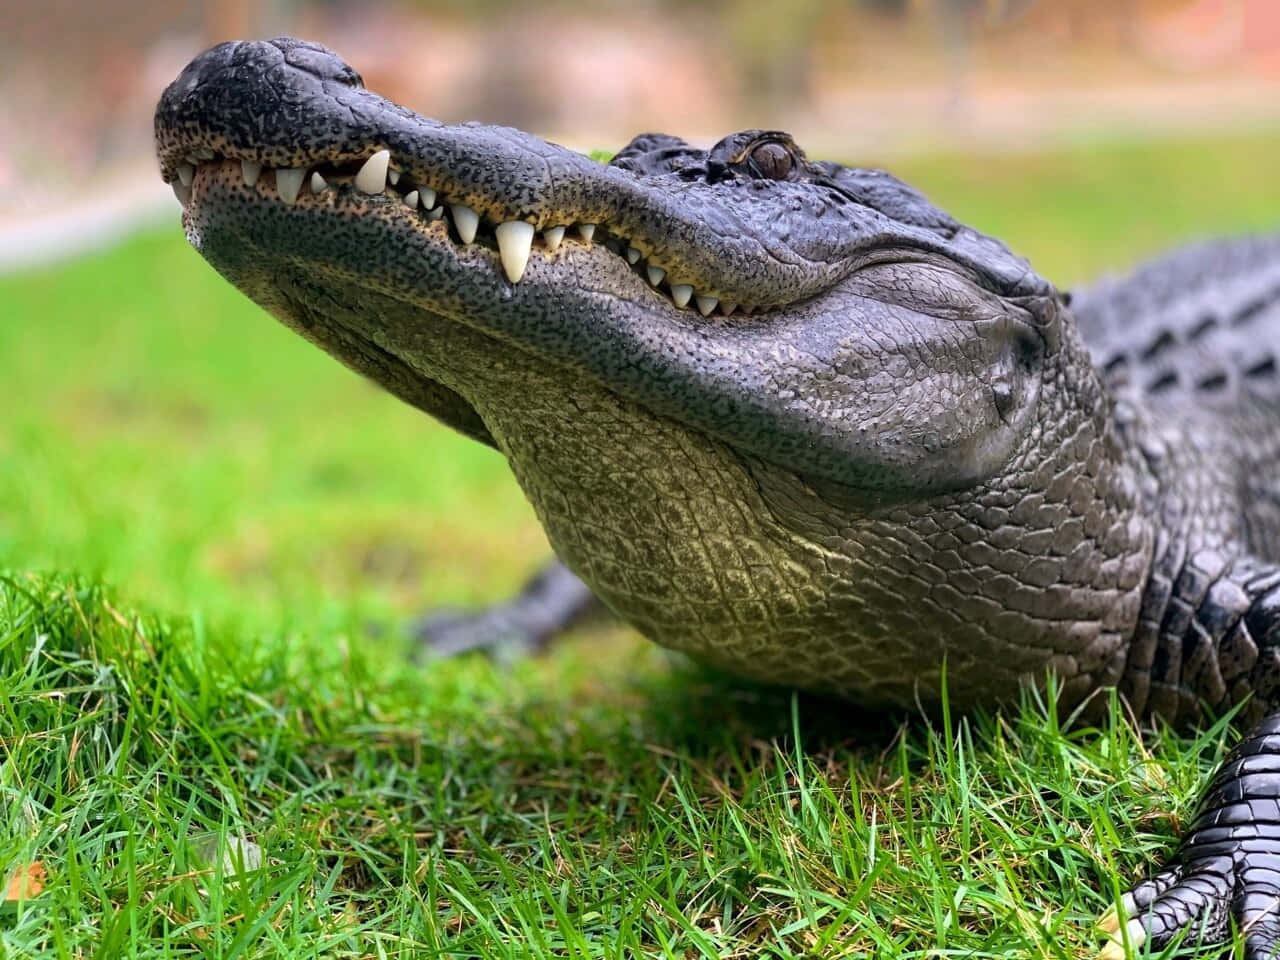 Smiling Black Crocodile On Grass.jpg Wallpaper